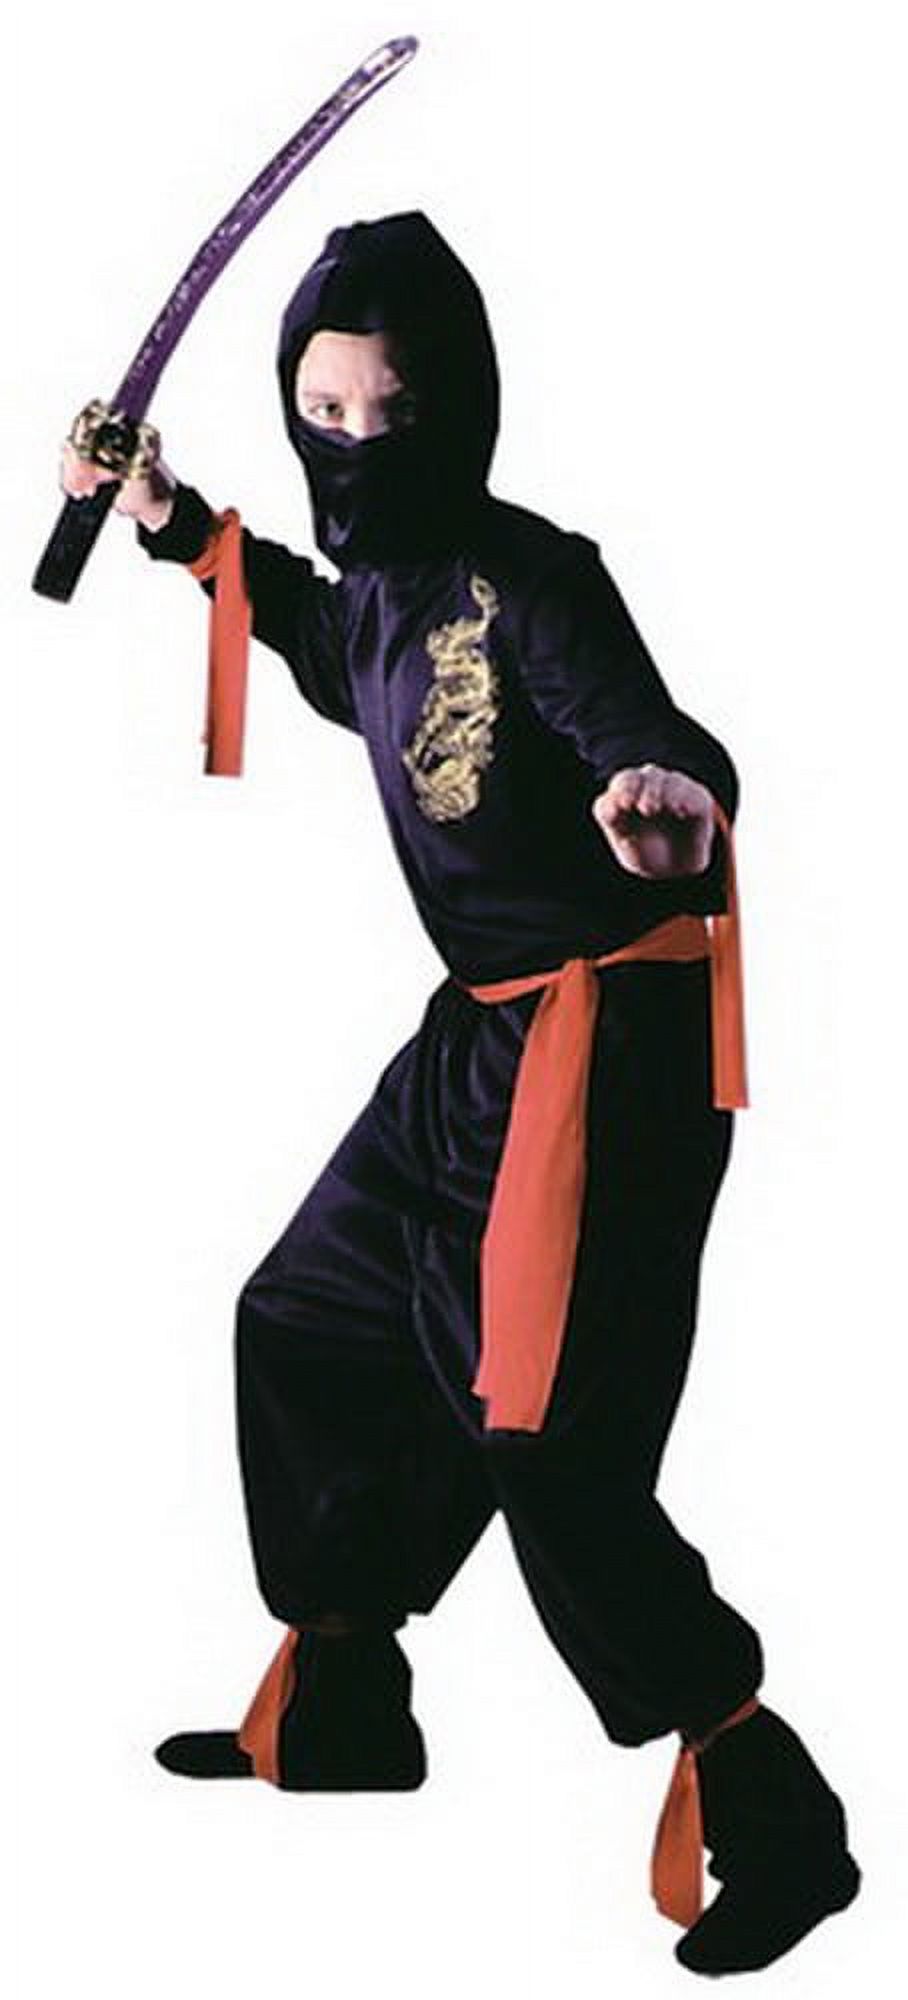 Fun World Black Ninja Halloween Fancy-Dress Costume for Child, Little Boys S - image 1 of 2